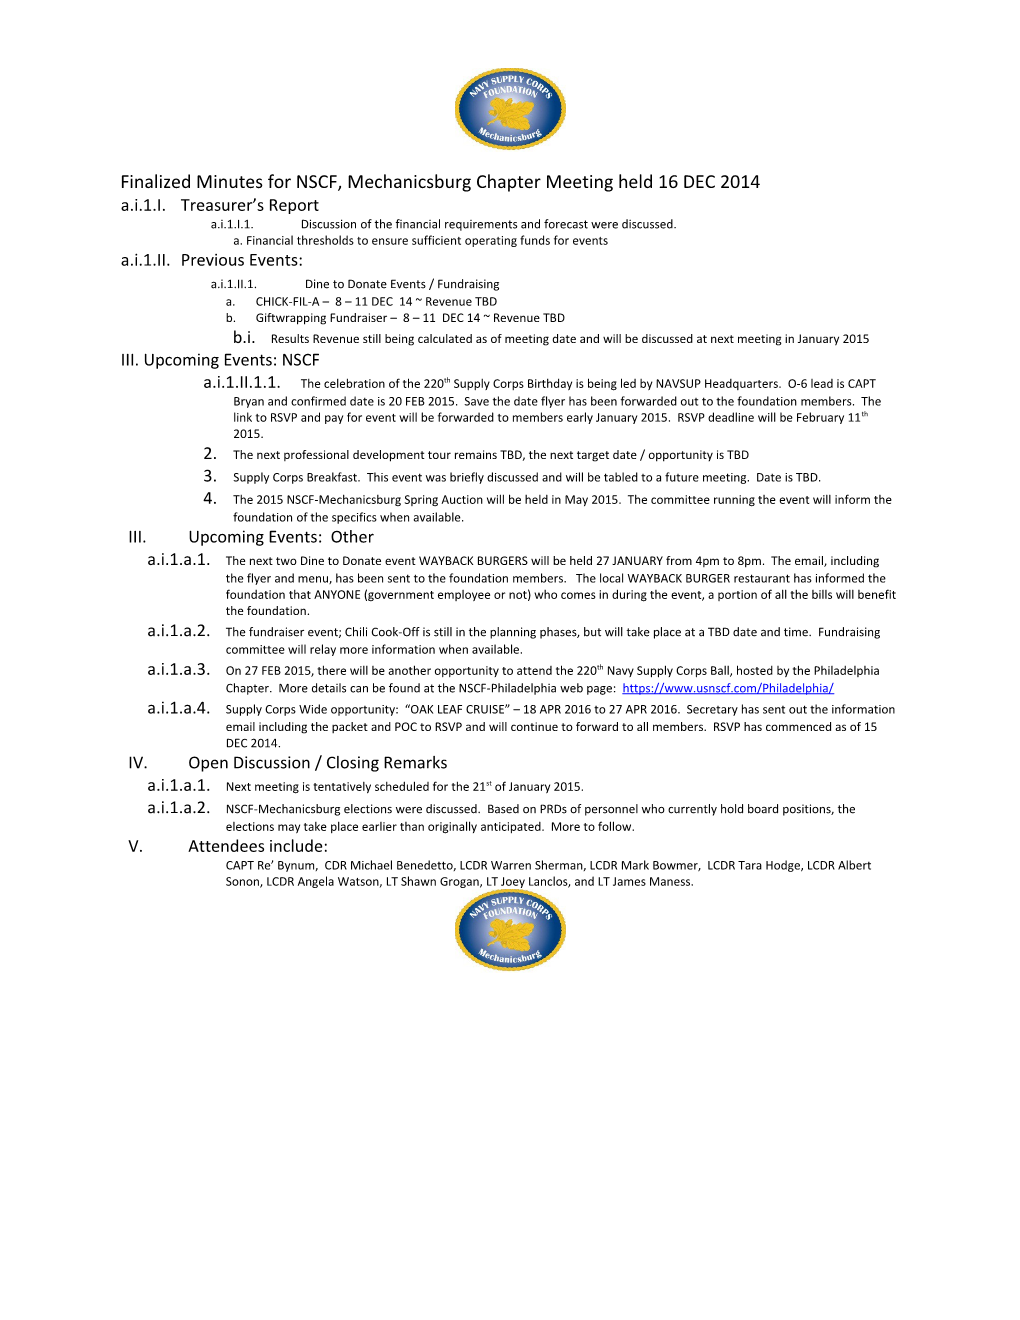 Finalized Minutes for NSCF, Mechanicsburg Chapter Meeting Held 16 DEC 2014